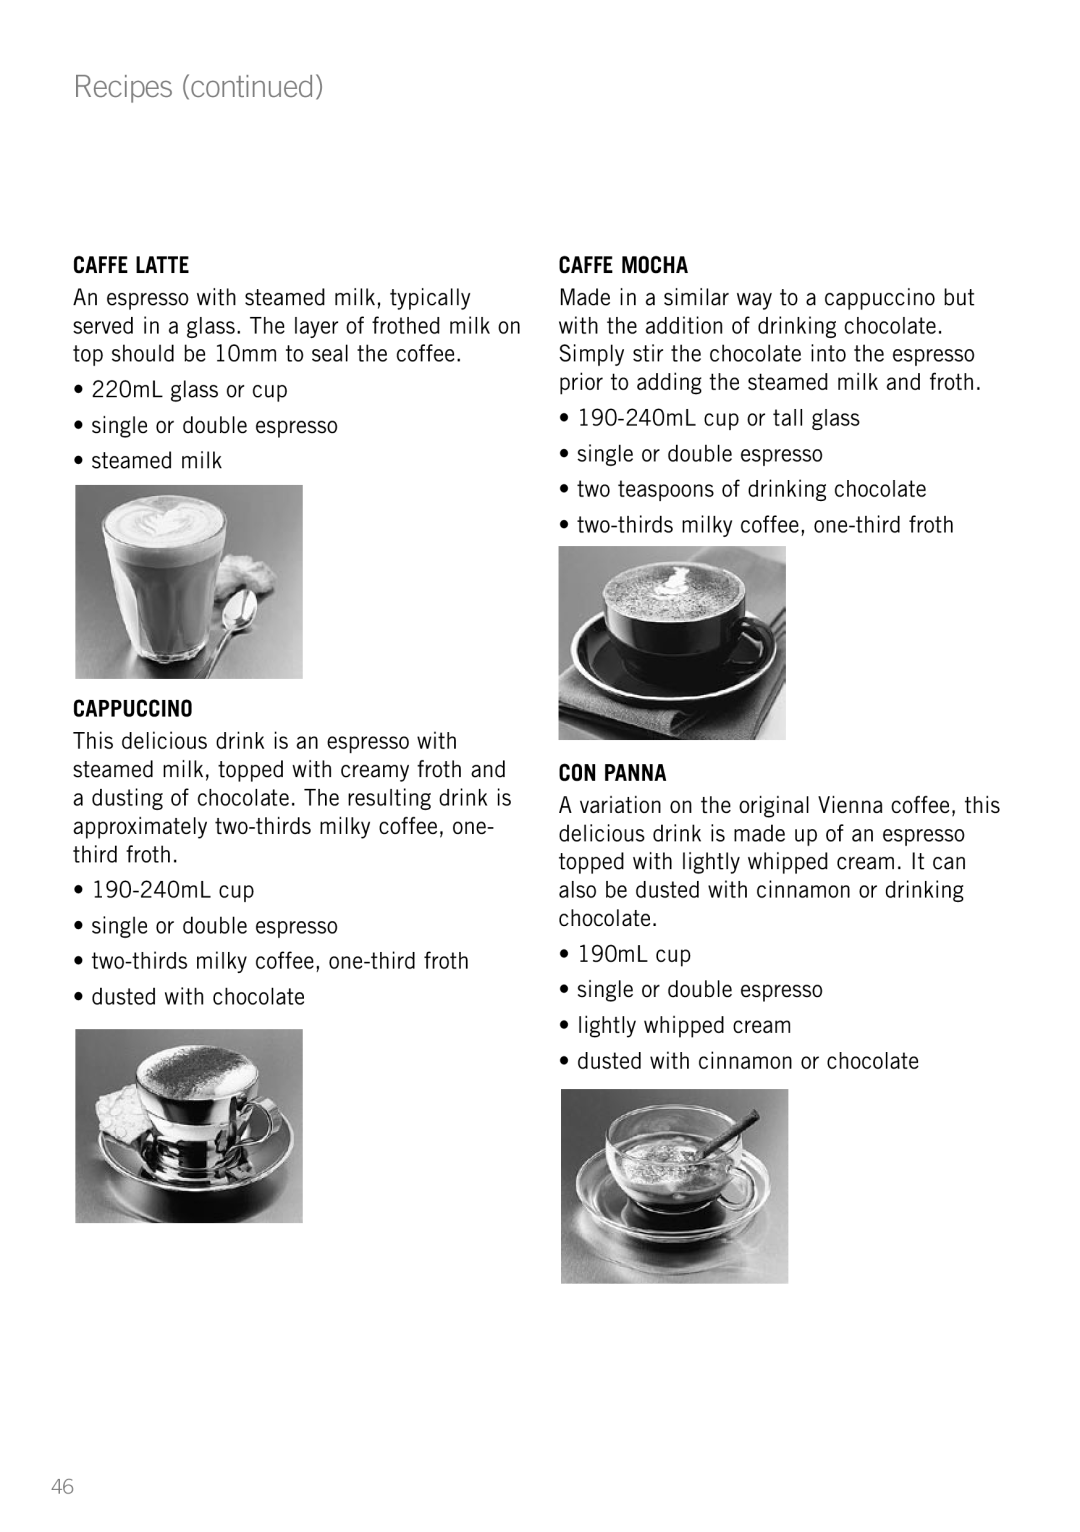 Sunbeam EM8910 manual Recipes continued, Caffe Latte, Caffe Mocha, Cappuccino, Con Panna 